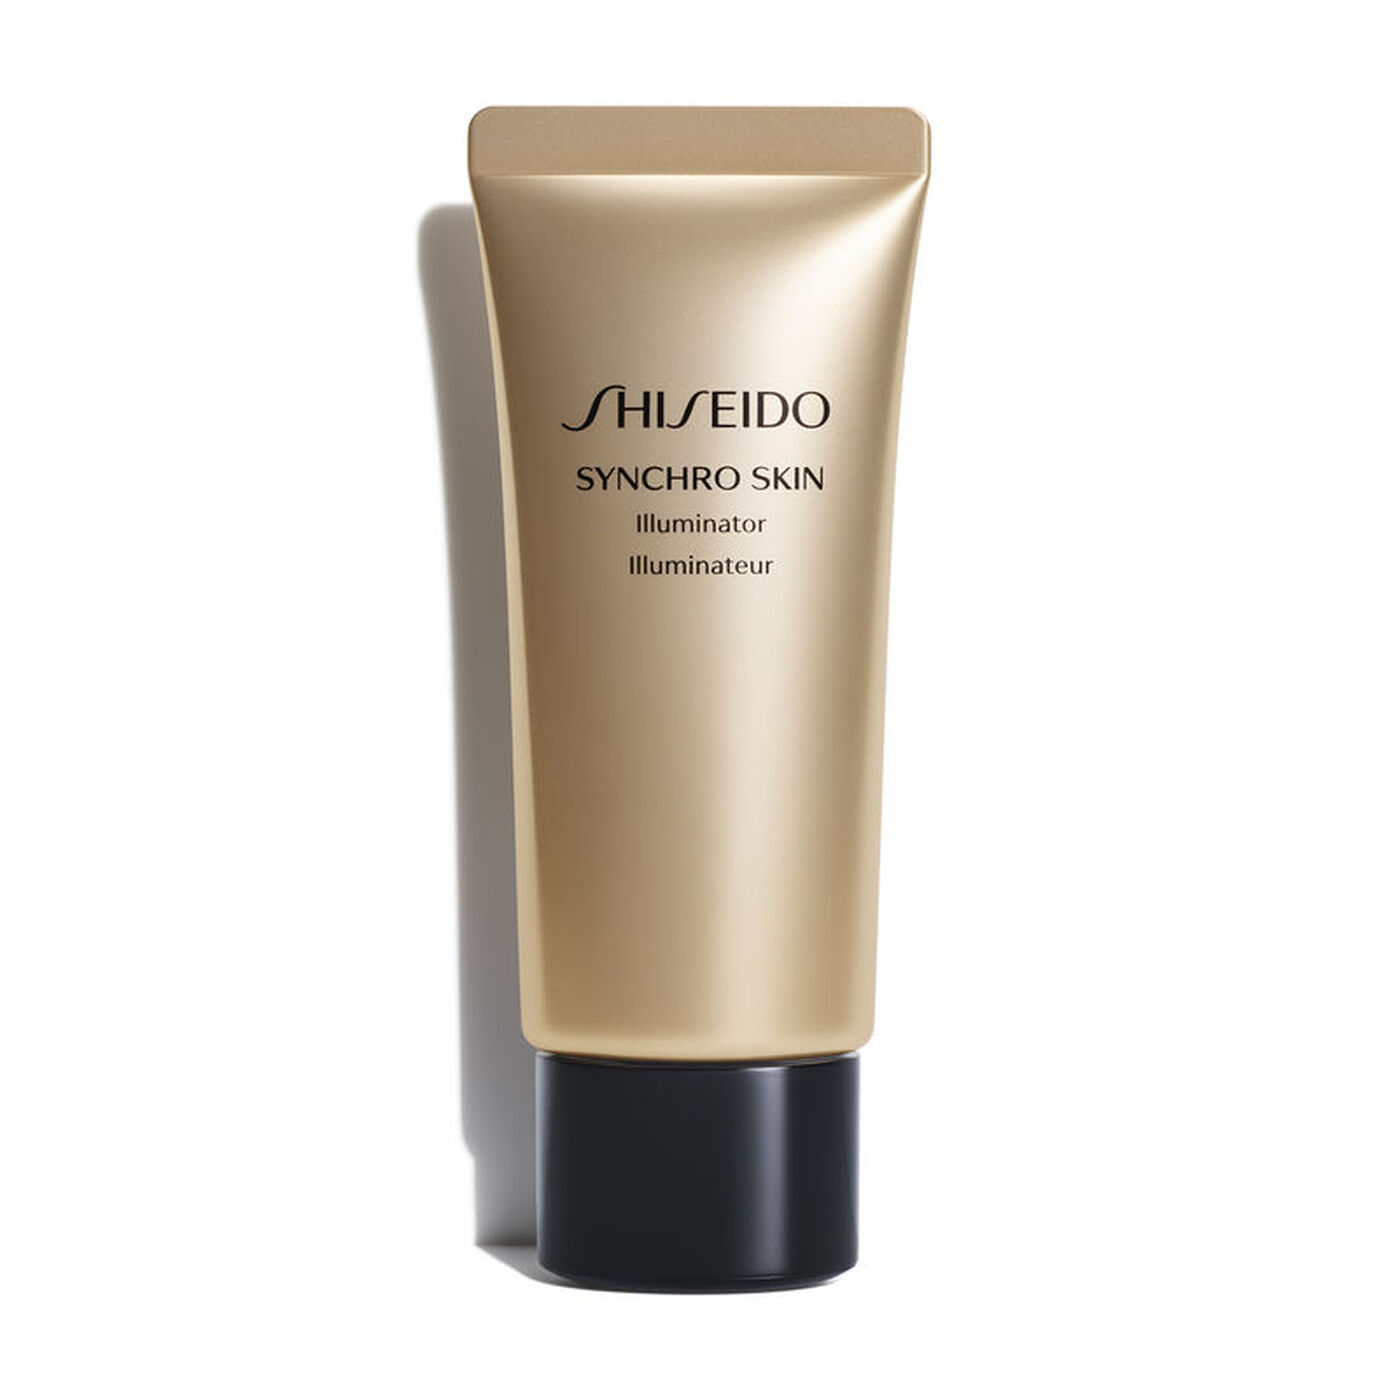 Kem bắt sáng Shiseido Synchro Skin Illuminator